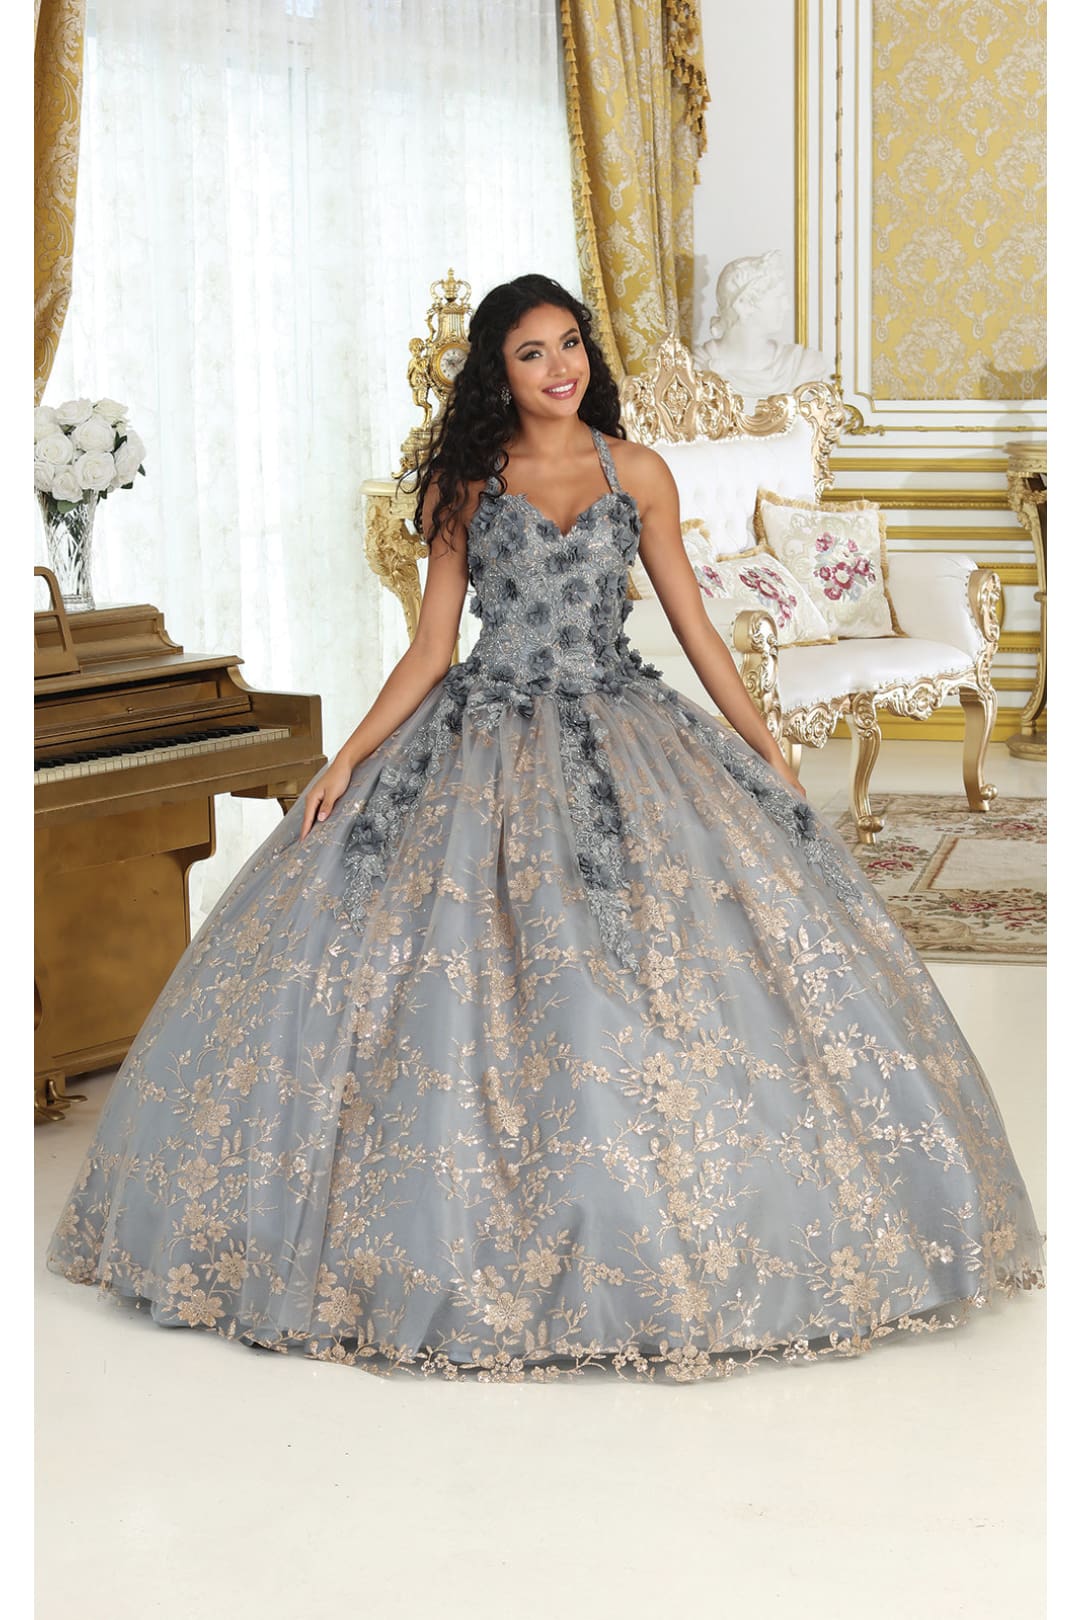 Layla K LK201 Halter 3D Floral Applique Glitter Ball Quinceanera Gown - CHARCOAL/GOLD / 4 - Dress